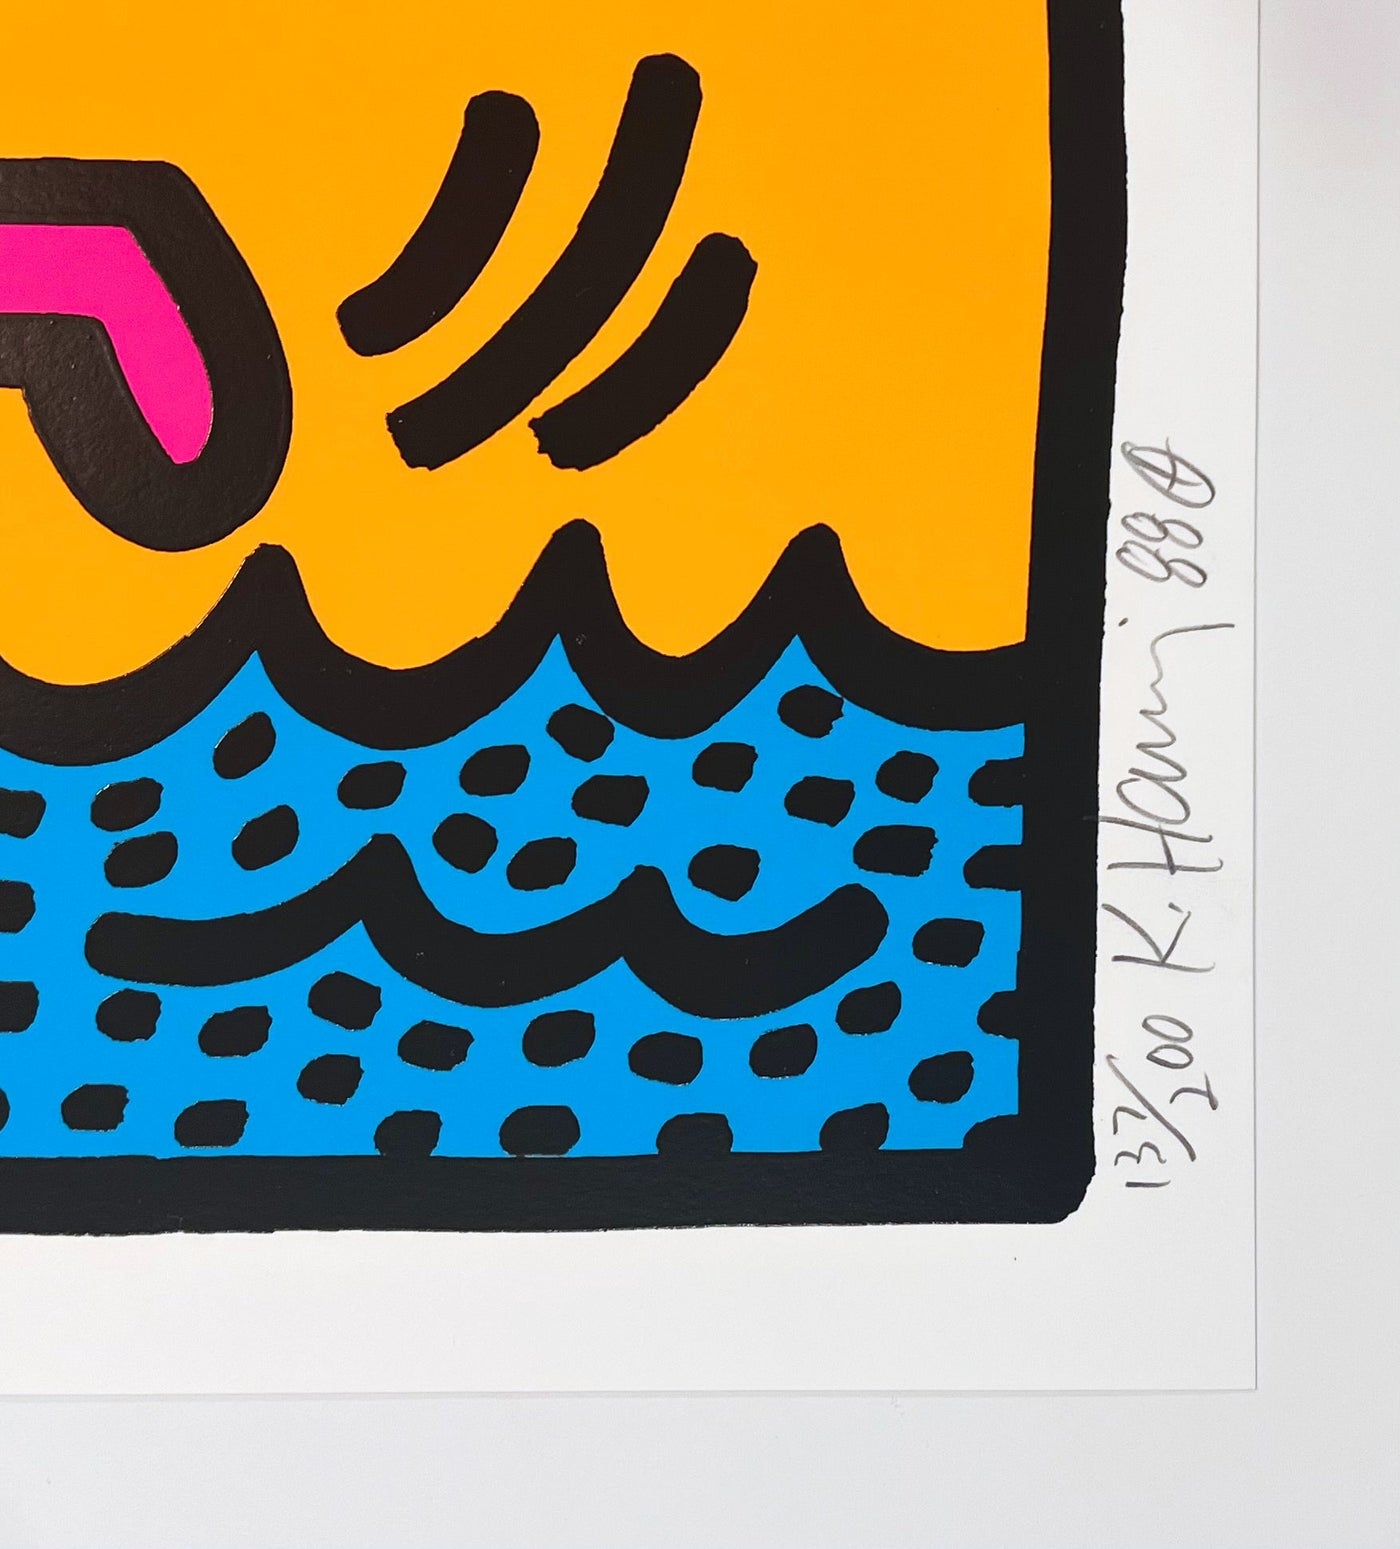 Keith Haring Pop Shop II Plate 3 (L. PP. 96-97) 1988